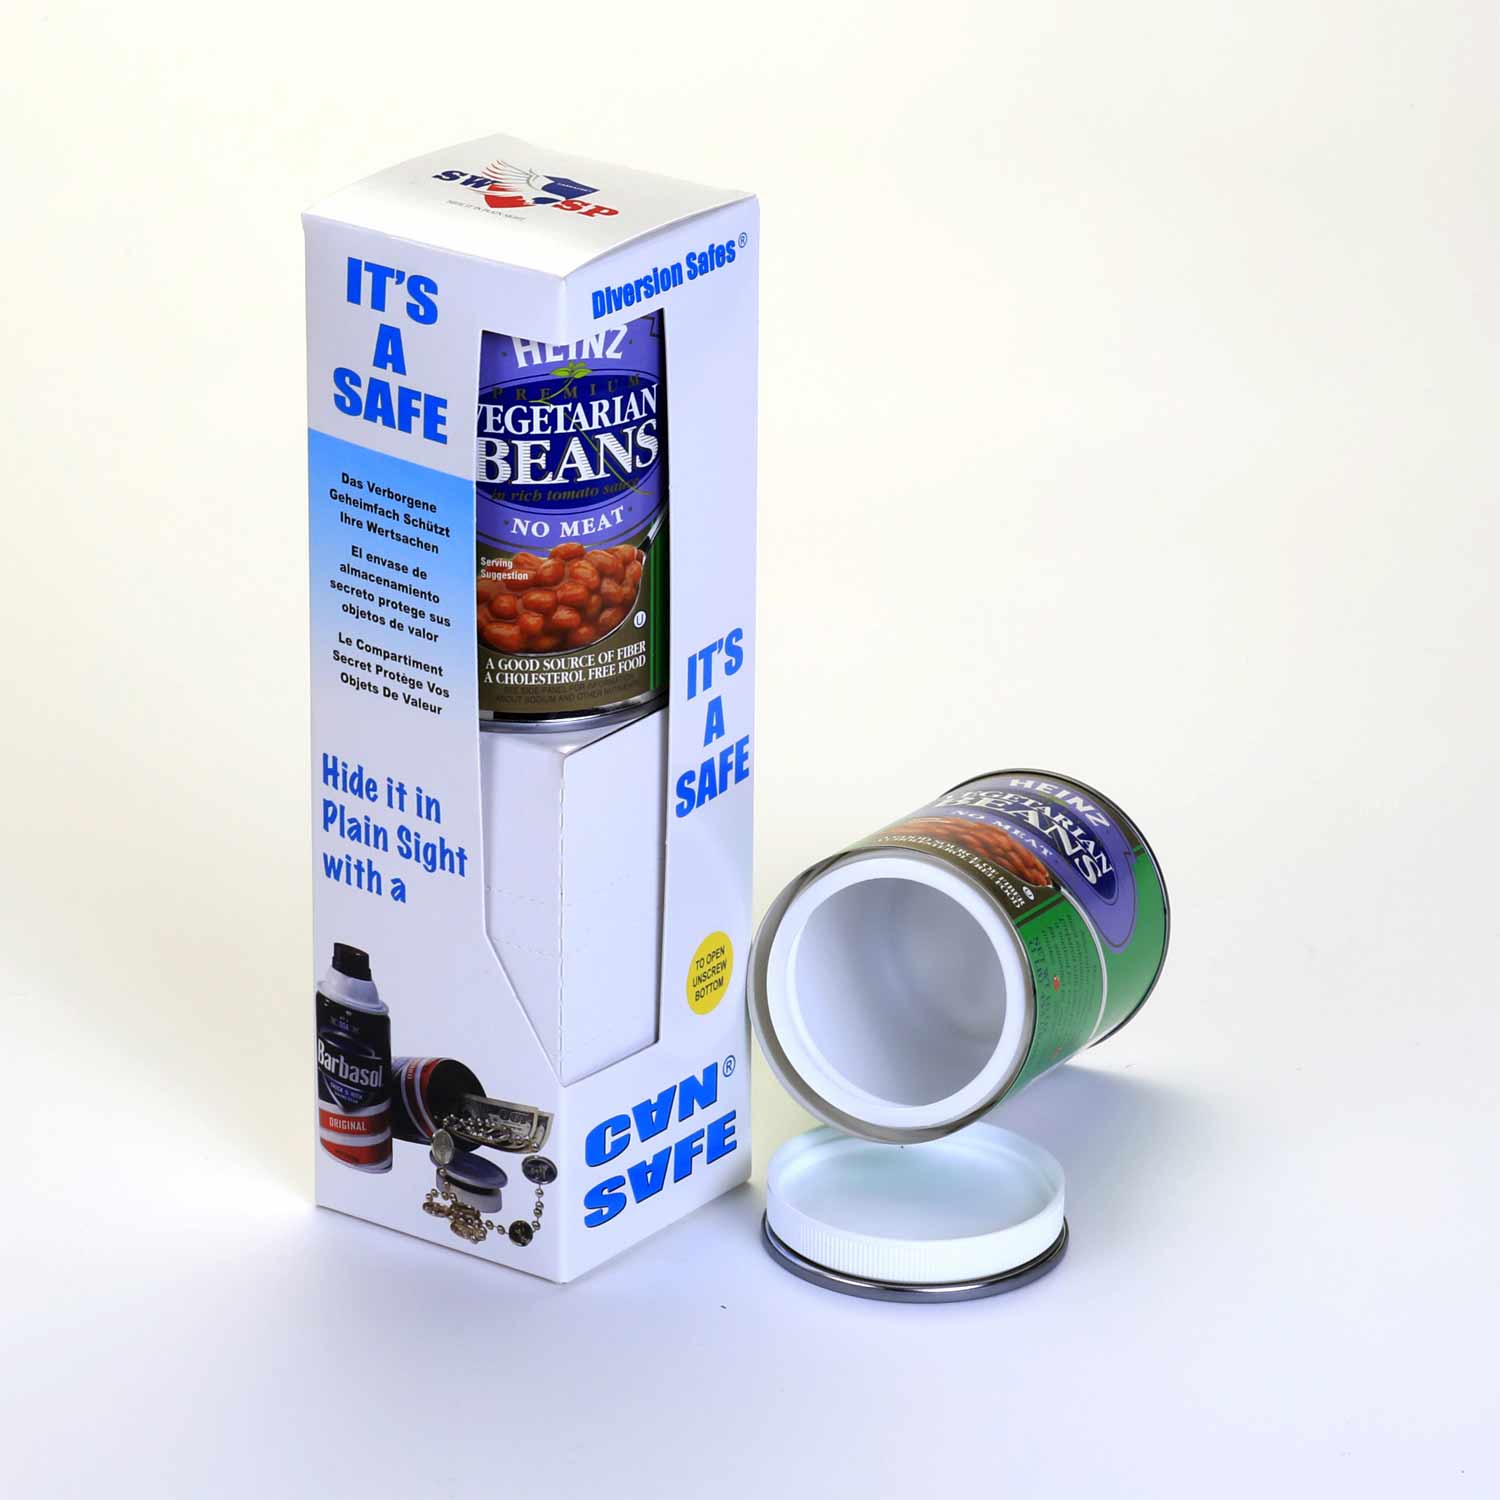 HJ Heinz Veg. Beans - Diversion Can Safe - Southwest Specialty